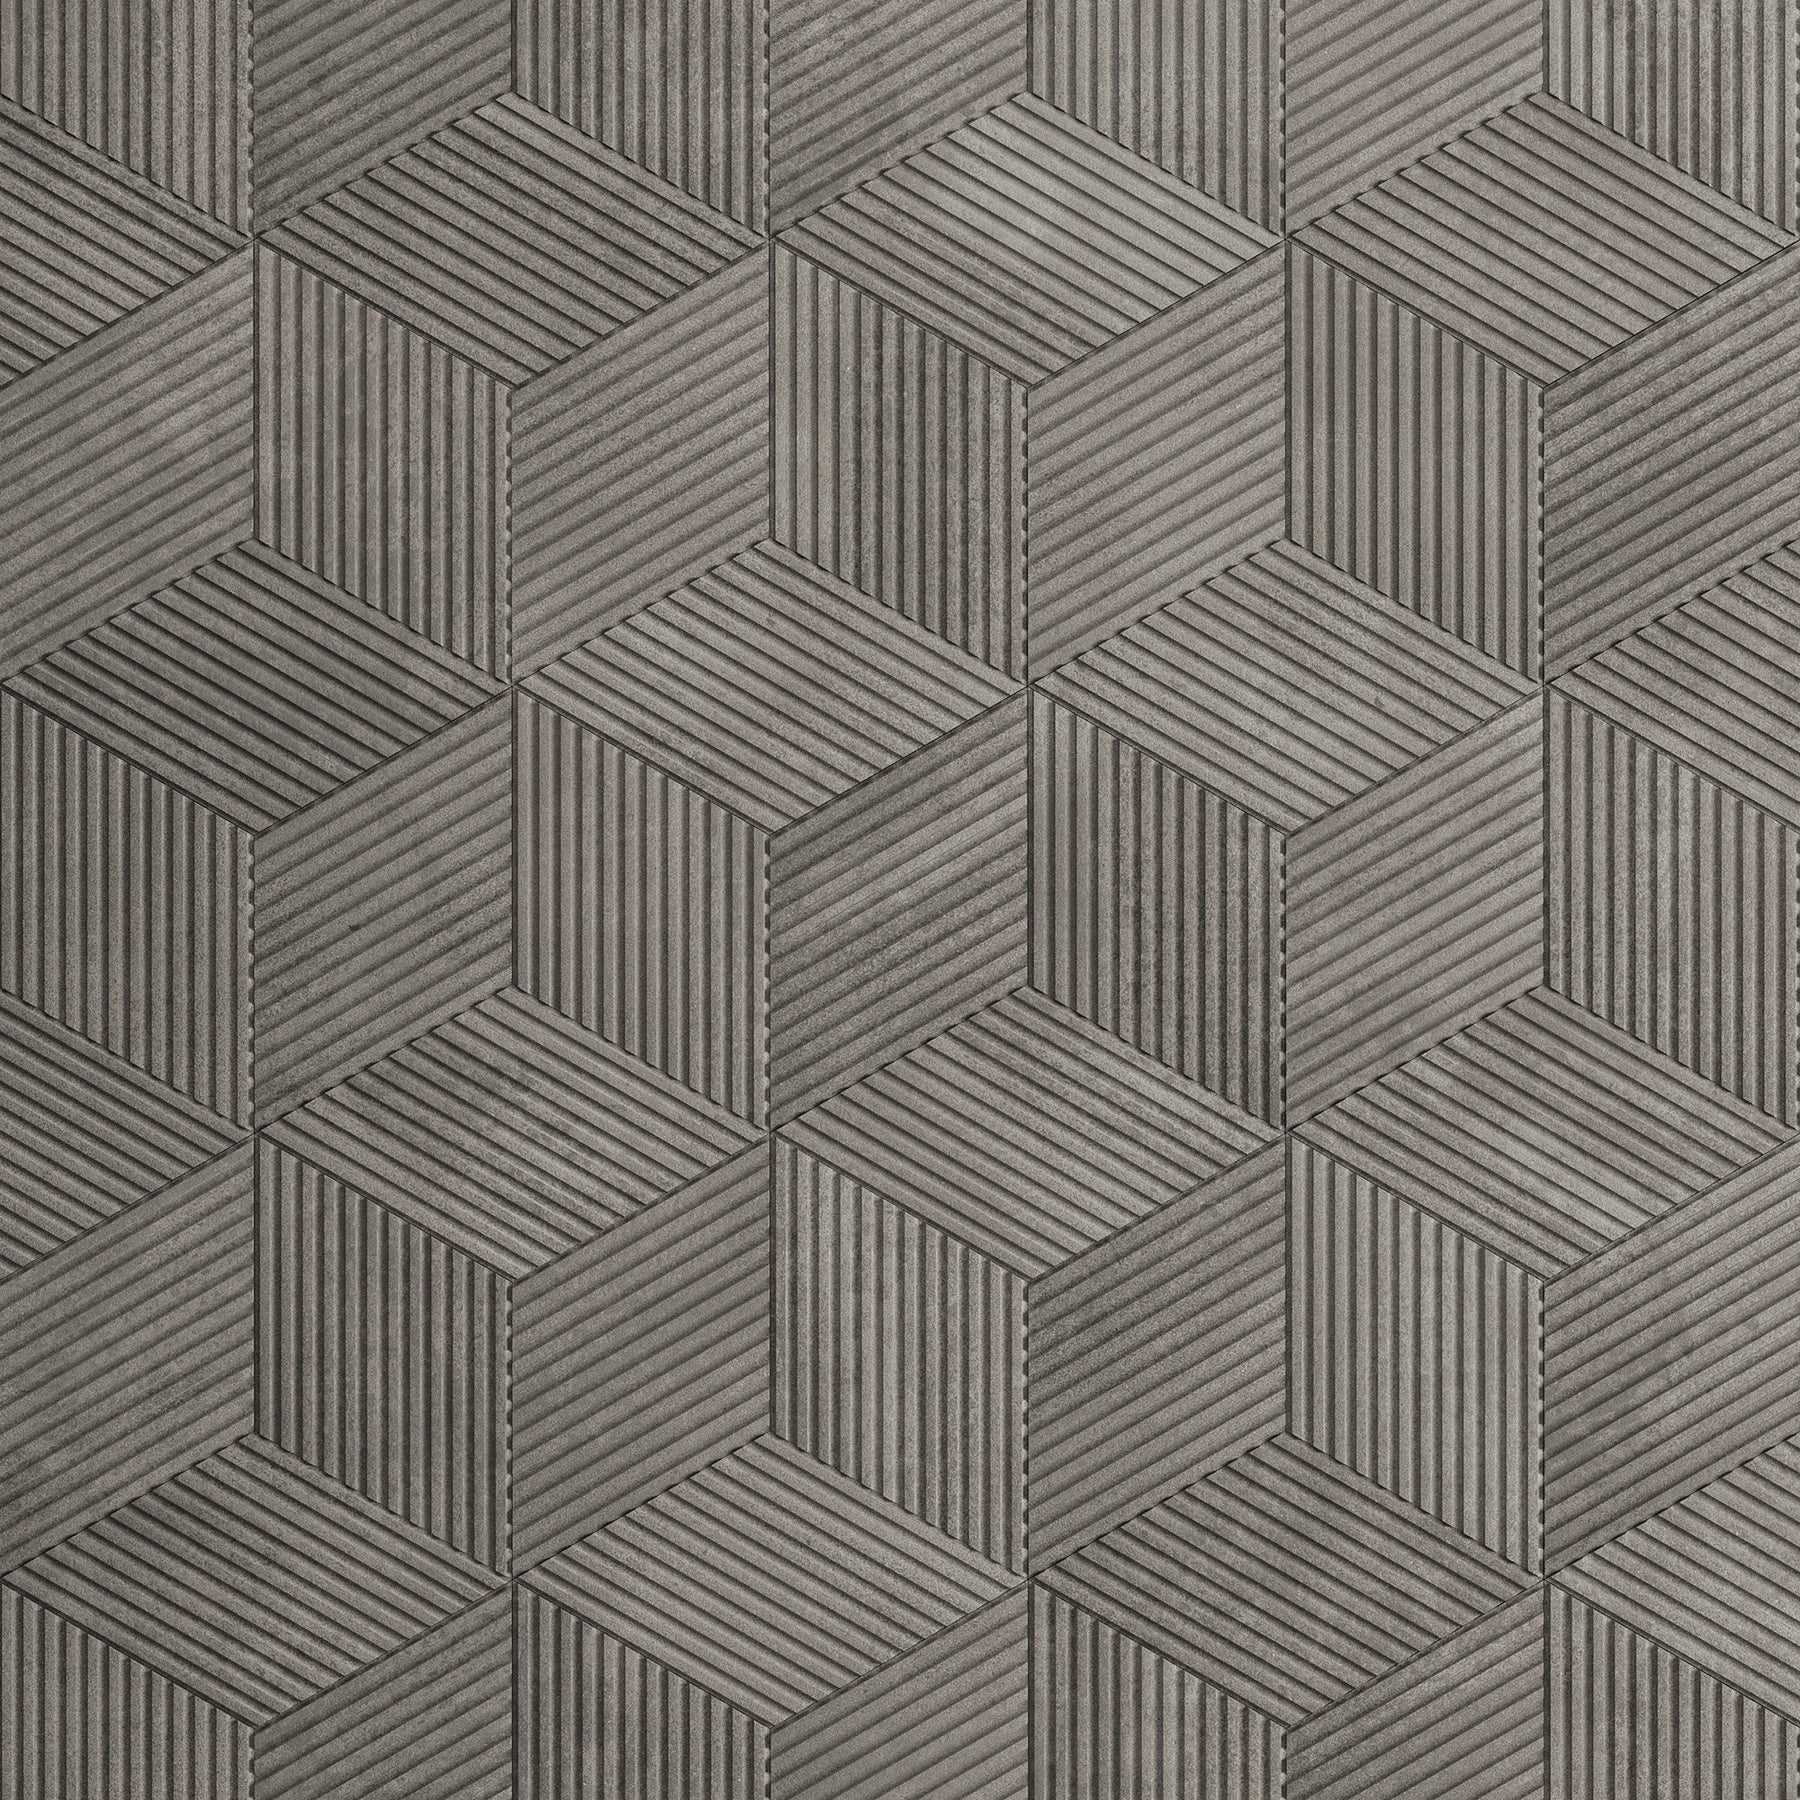 Corrugate 3D Tile – Inhabit